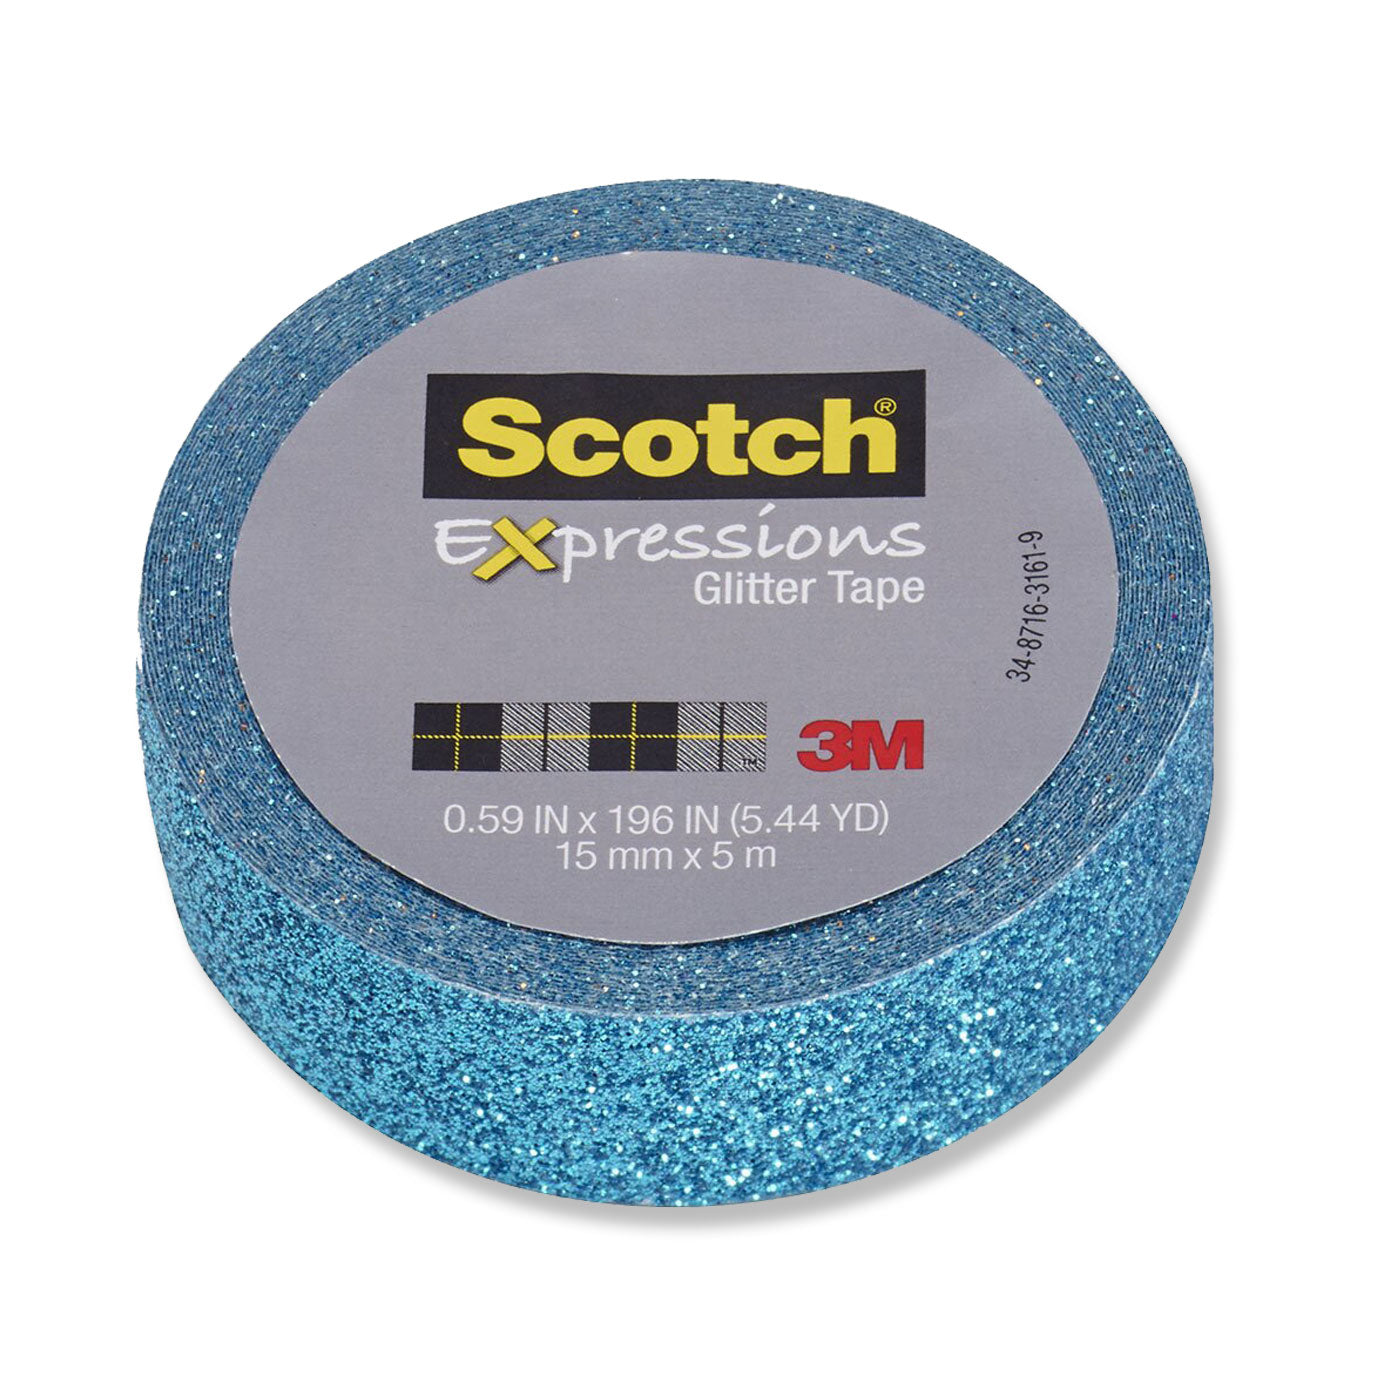 Scotch Expressions Glitter Washi Tape C514-BLU 15mm x 5m Teal Blue